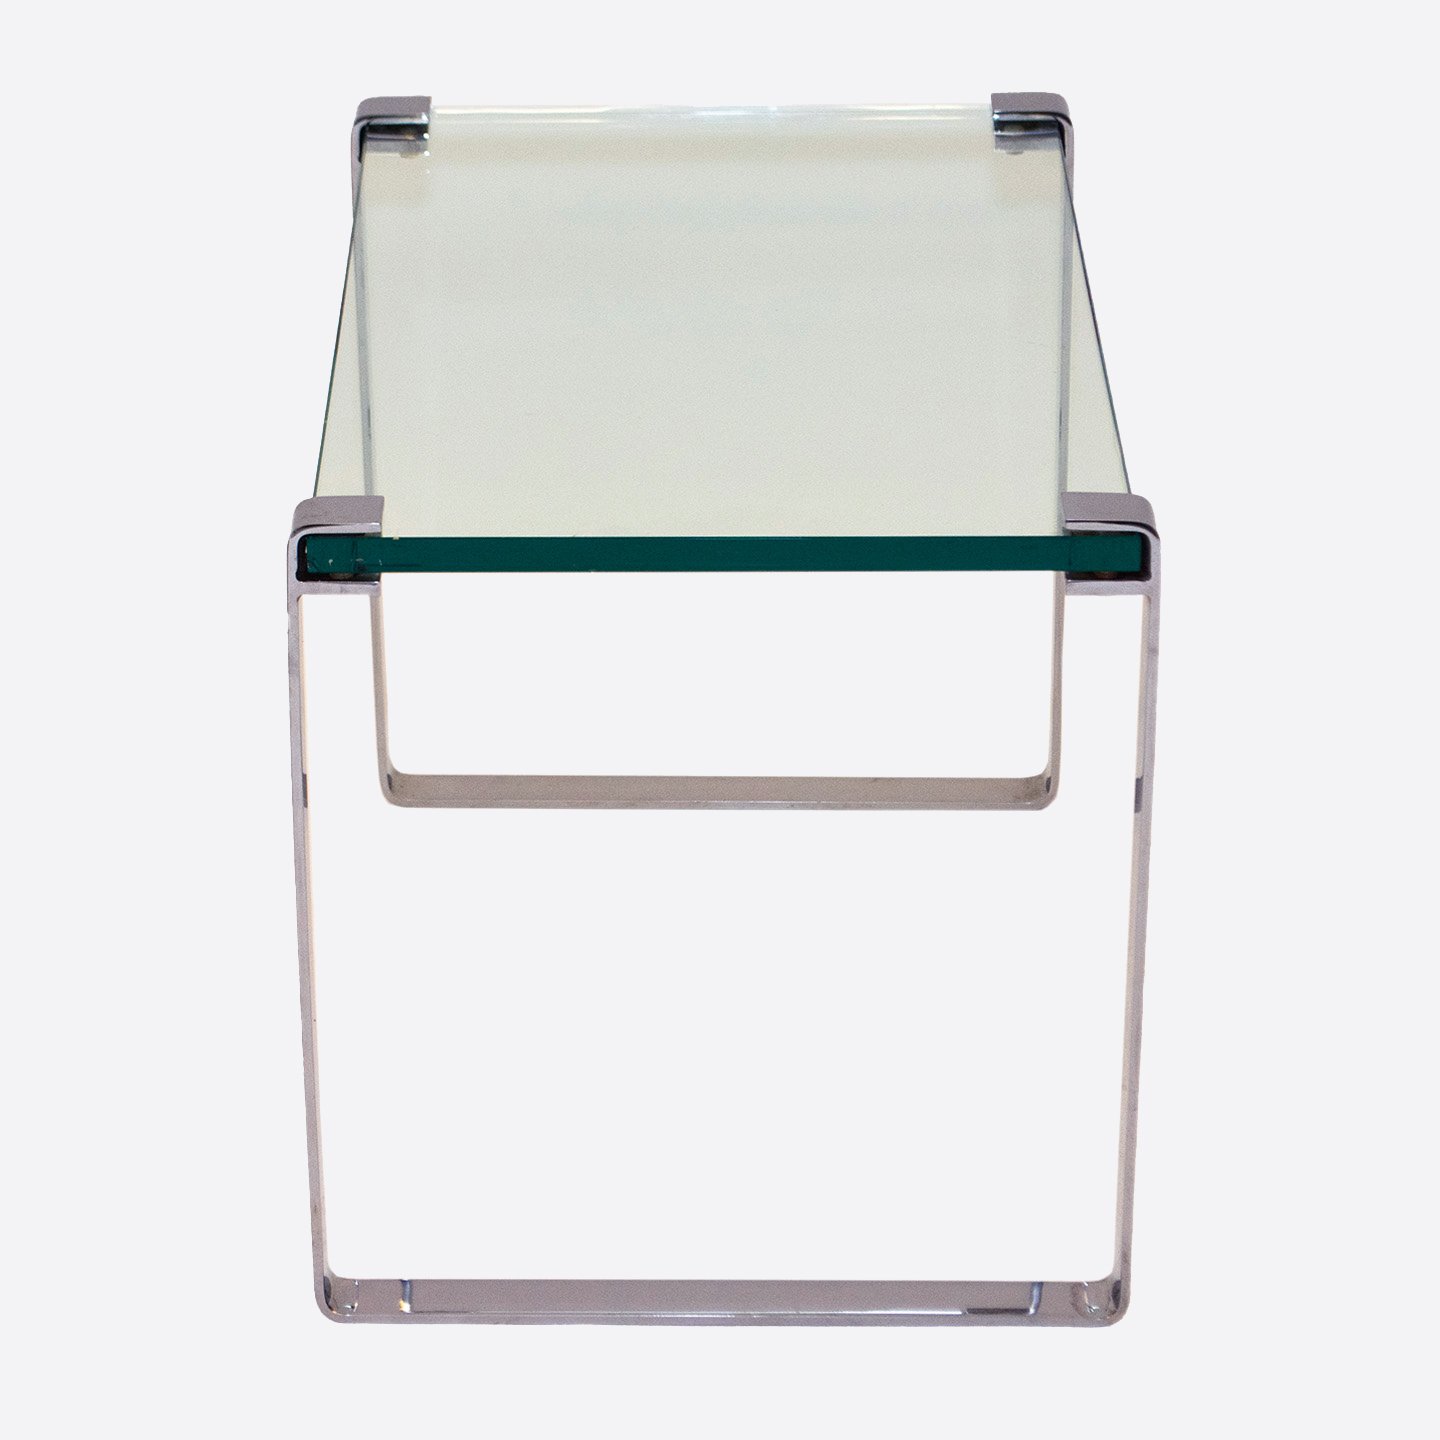 M-glass-table4.jpg